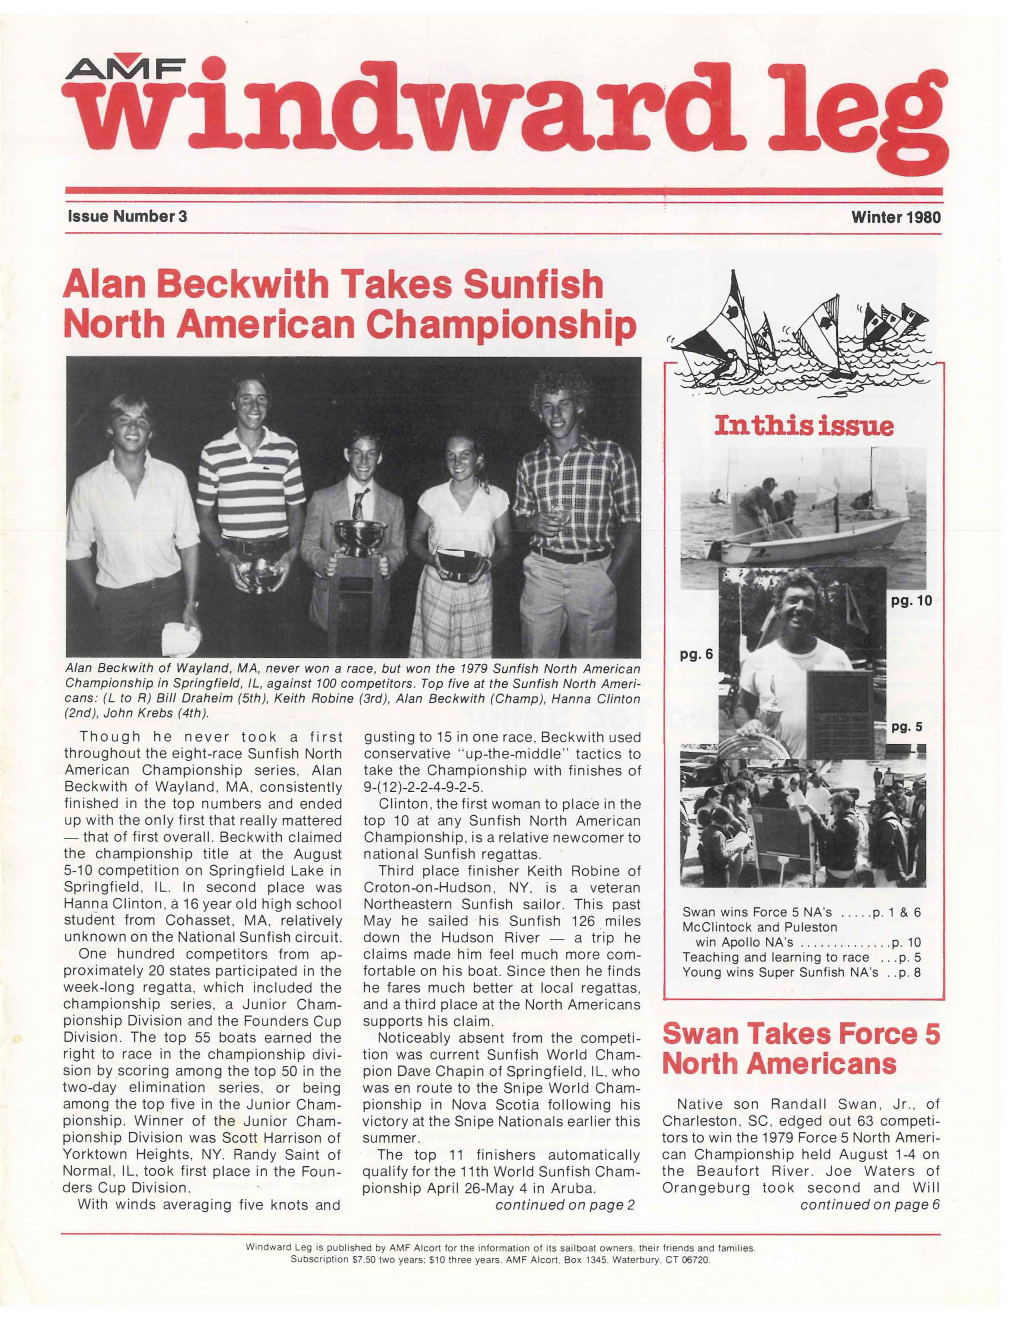 Alan Beckwith Takes Sunfish North American Championship